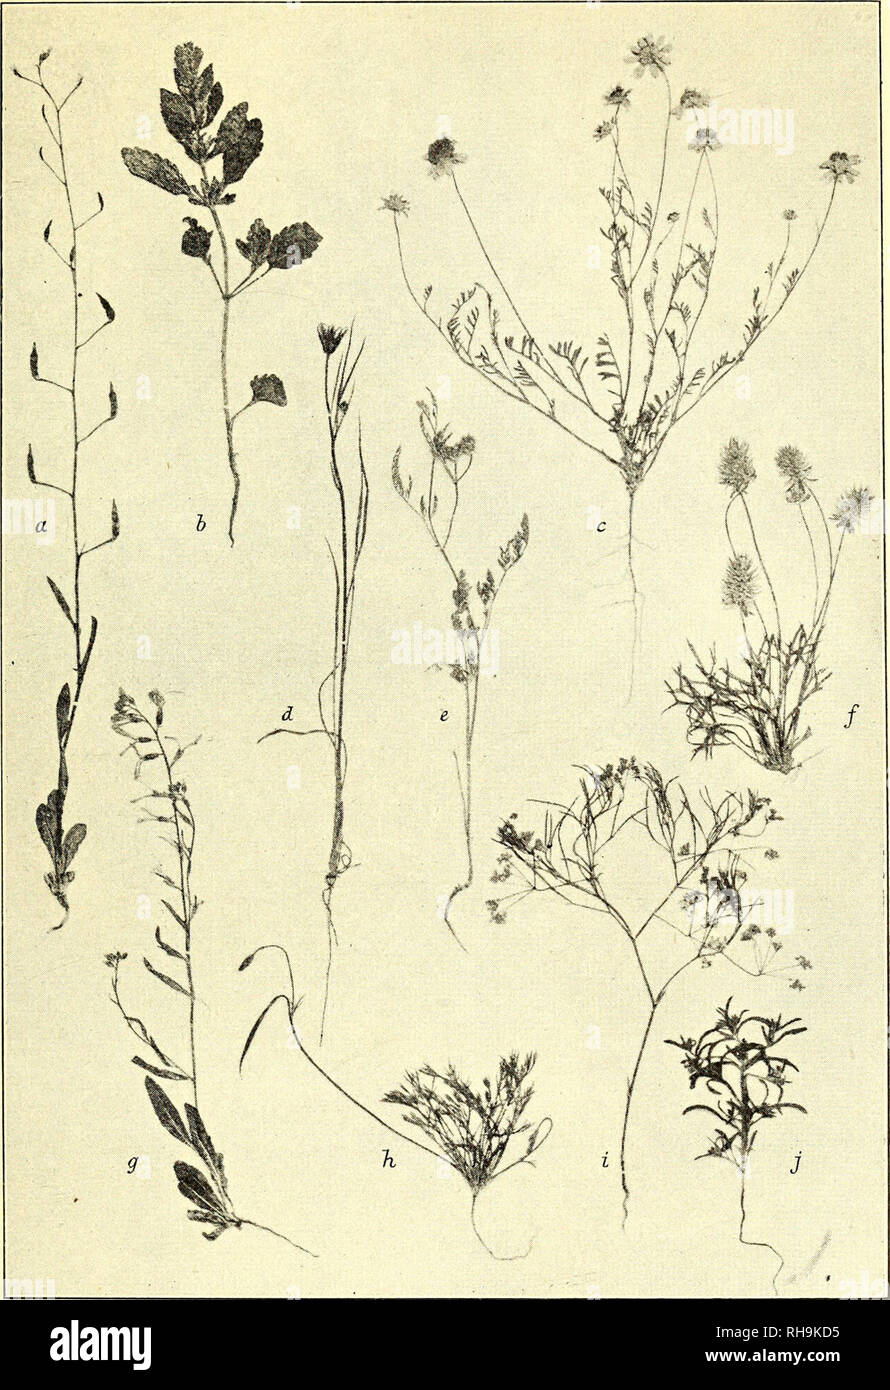 . Botanisk tidsskrift. Botany; Plants; Plants. — 53 —. Fig. 5. Forskellige efemere Planter fra Lerørken: a, Goldbachia laevigata, b, Lallemantia Boyleana. c, Matricaria lamellata. d, Koepinia linearis, e, Cau- calis leptophylla. f, Ceratocephalus orthoceras. g, Malcolmia Bungei. h, Hype- coum pendulum, i, Acanthopleura capillifolia. j, Lappula spinocarpos. Blandt Stauder, som blomstrer om Foraaret, kan mærkes en smuk rød Tulipa sp., den blaablomstrede lxilirion Pallasii, Al- lium Tschulpias, tataricum og flere Arter, Gagea reticulata, Knold- geofyterne Geranium tuberosum og Leontice incerta, e Stock Photo